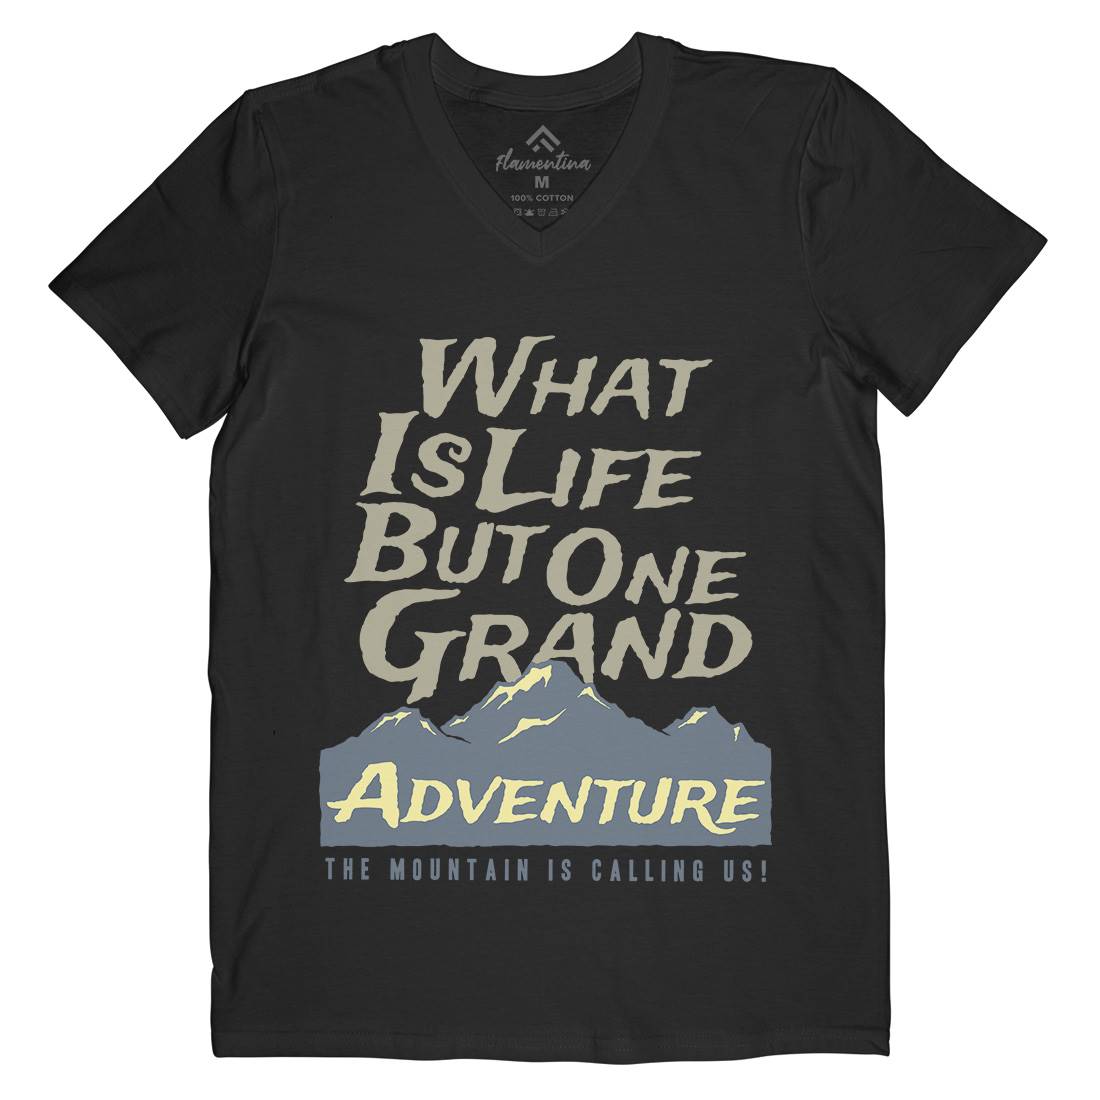 Great Adventure Mens V-Neck T-Shirt Nature A321